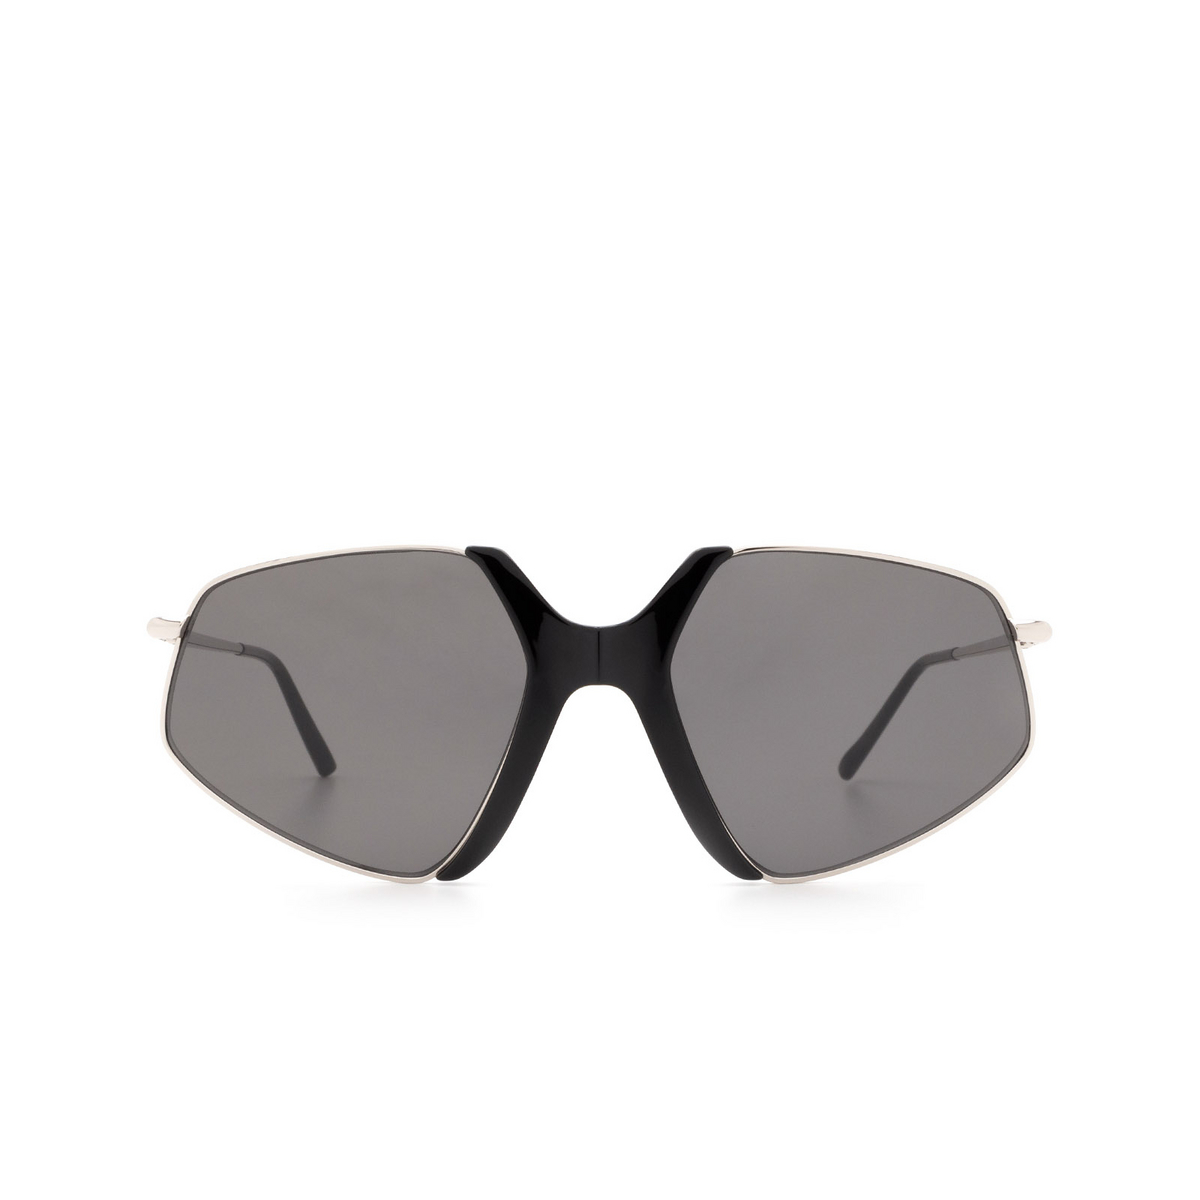 Sportmax® Irregular Sunglasses: SM0029 color Black 01A - front view.